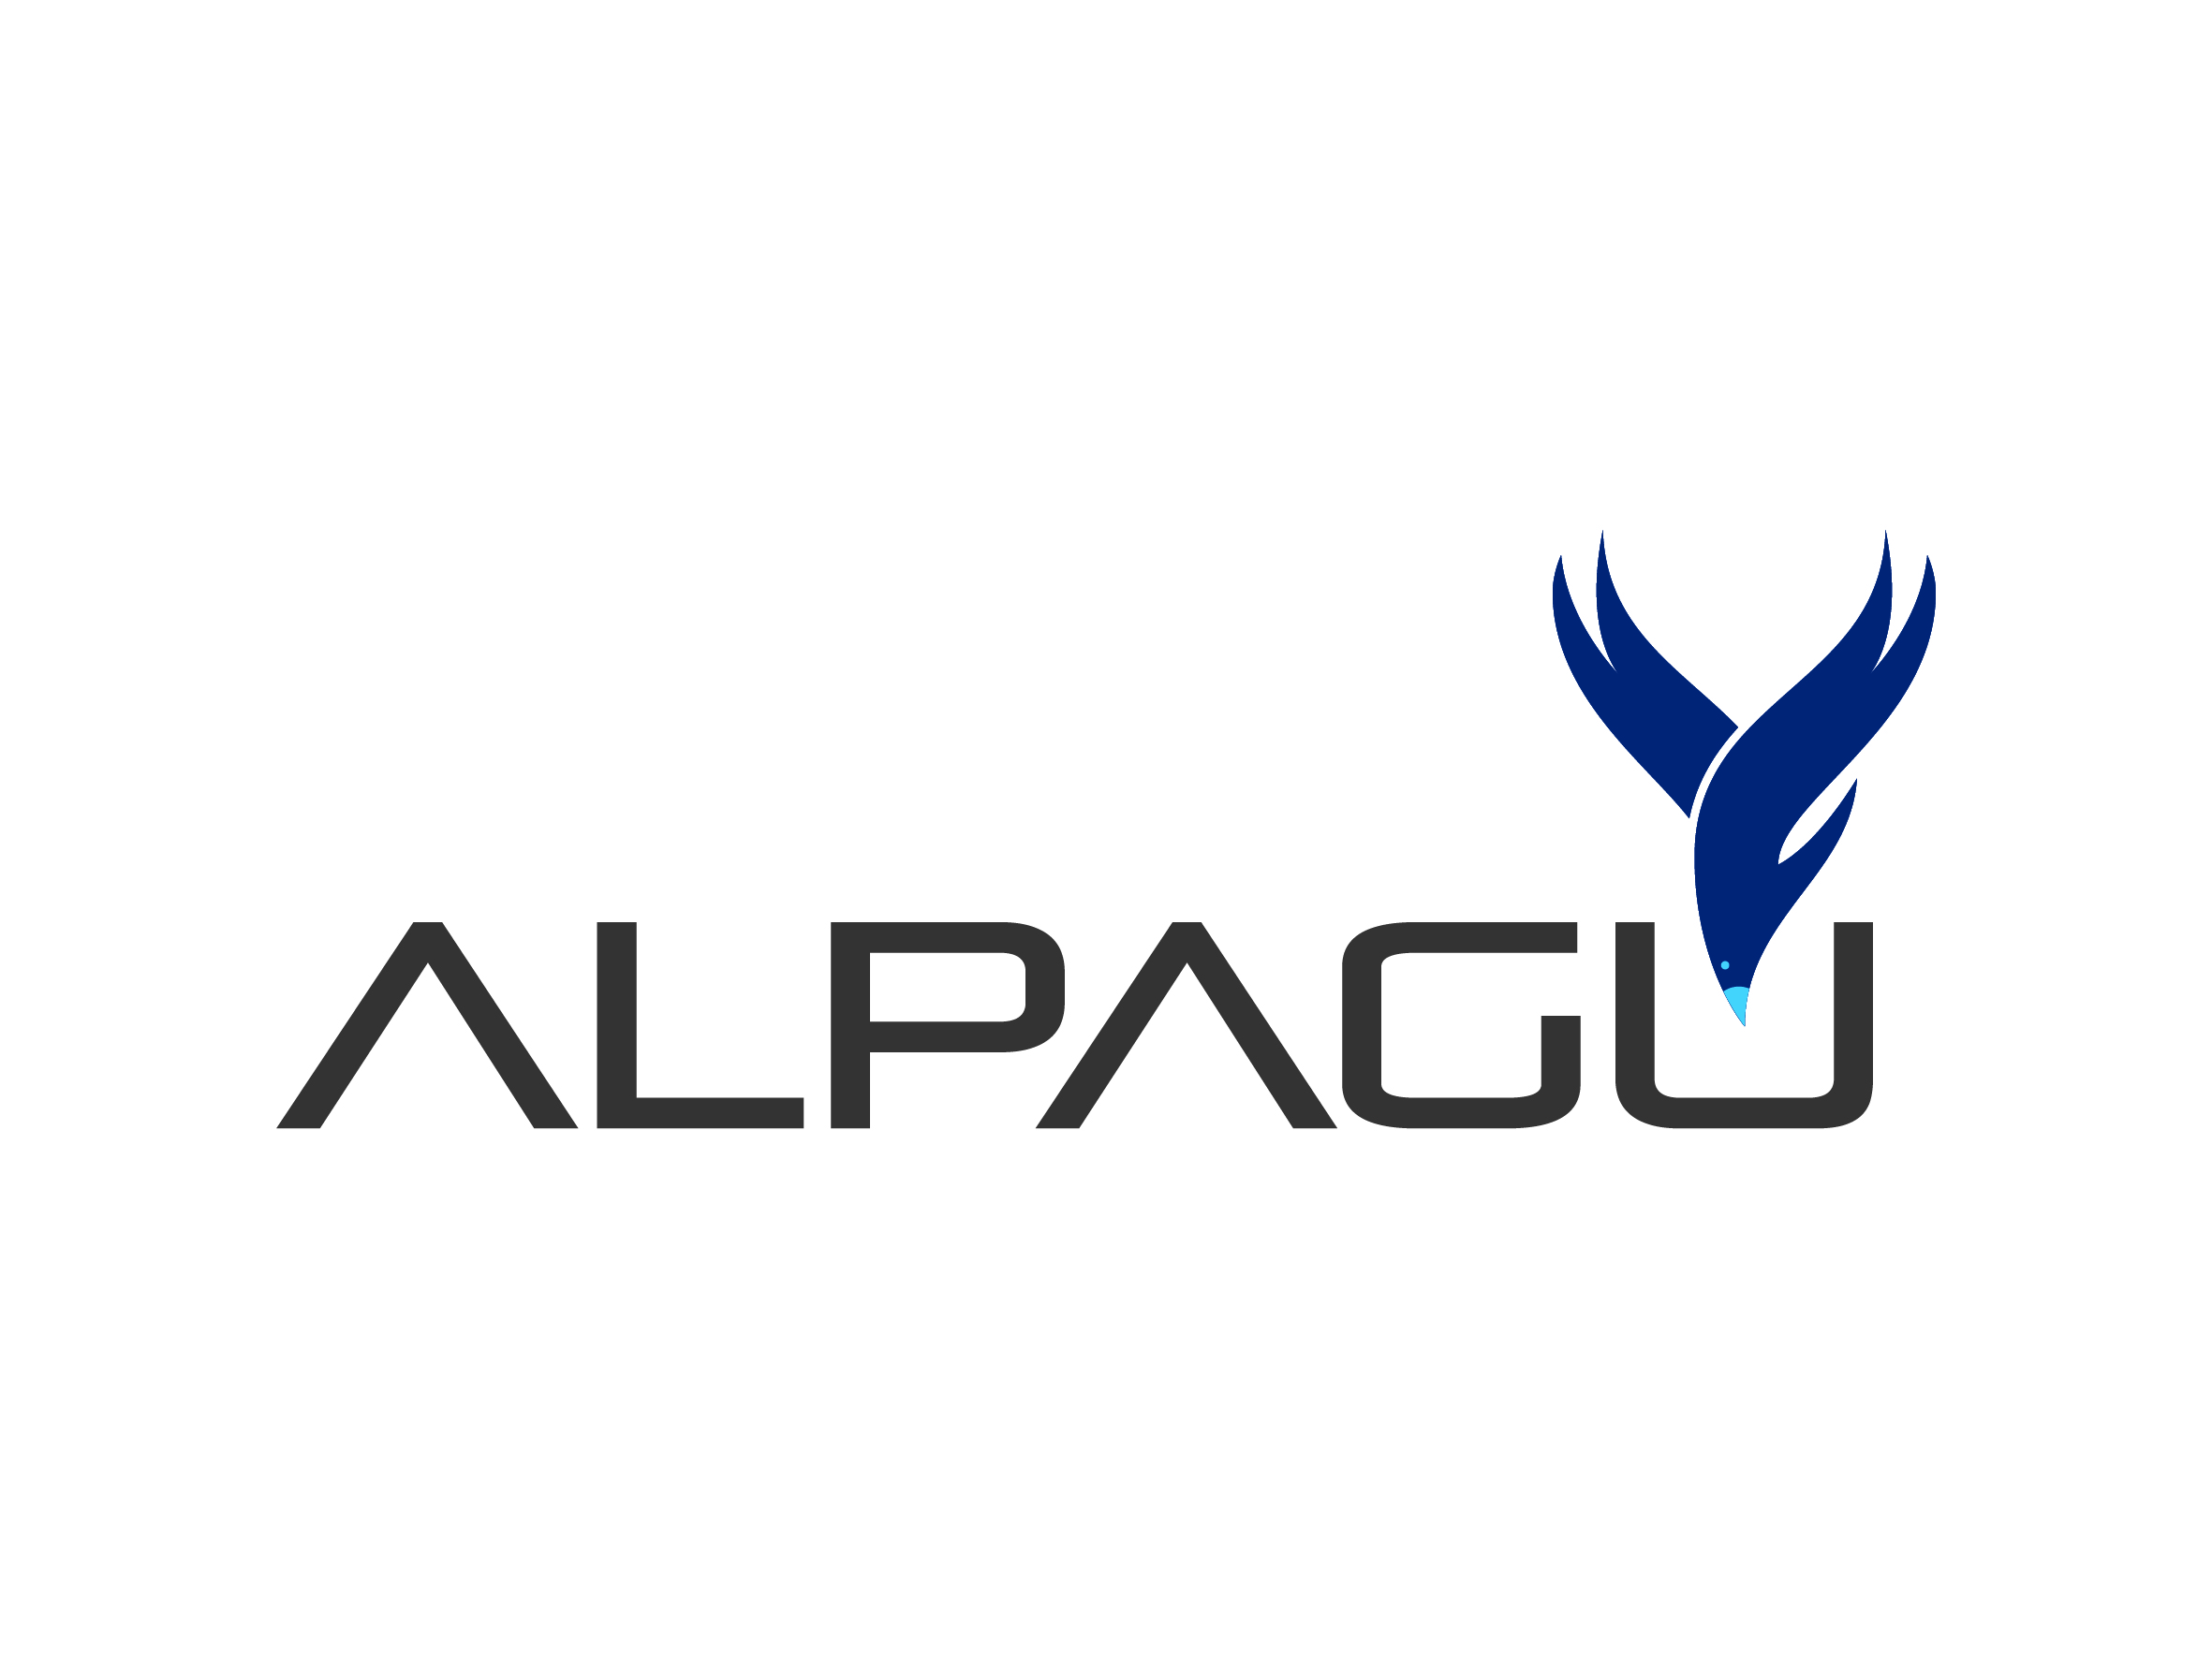 ALPAGU Logotype 01 020118